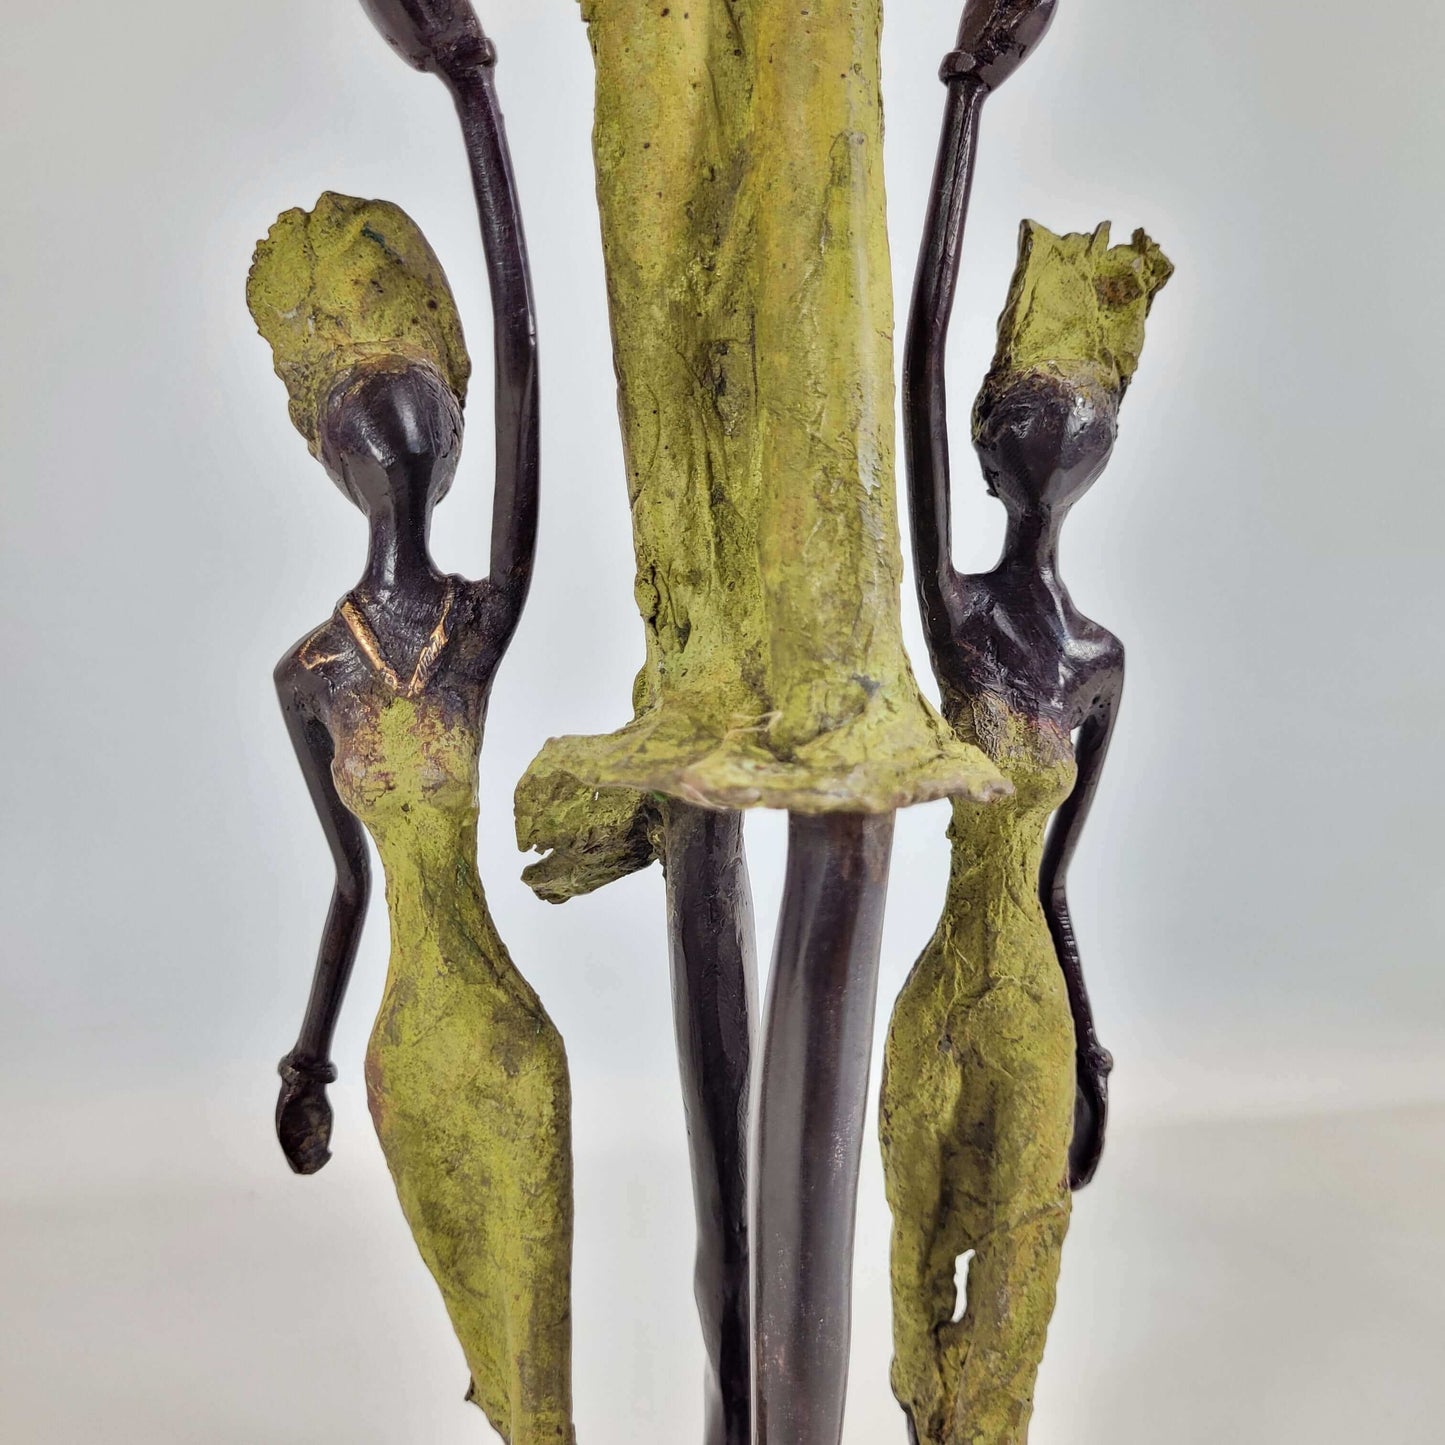 Bronze-Skulptur "Femme élégante" by Hamed Nikiema | 52cm 2kg | verschiedene Unikate